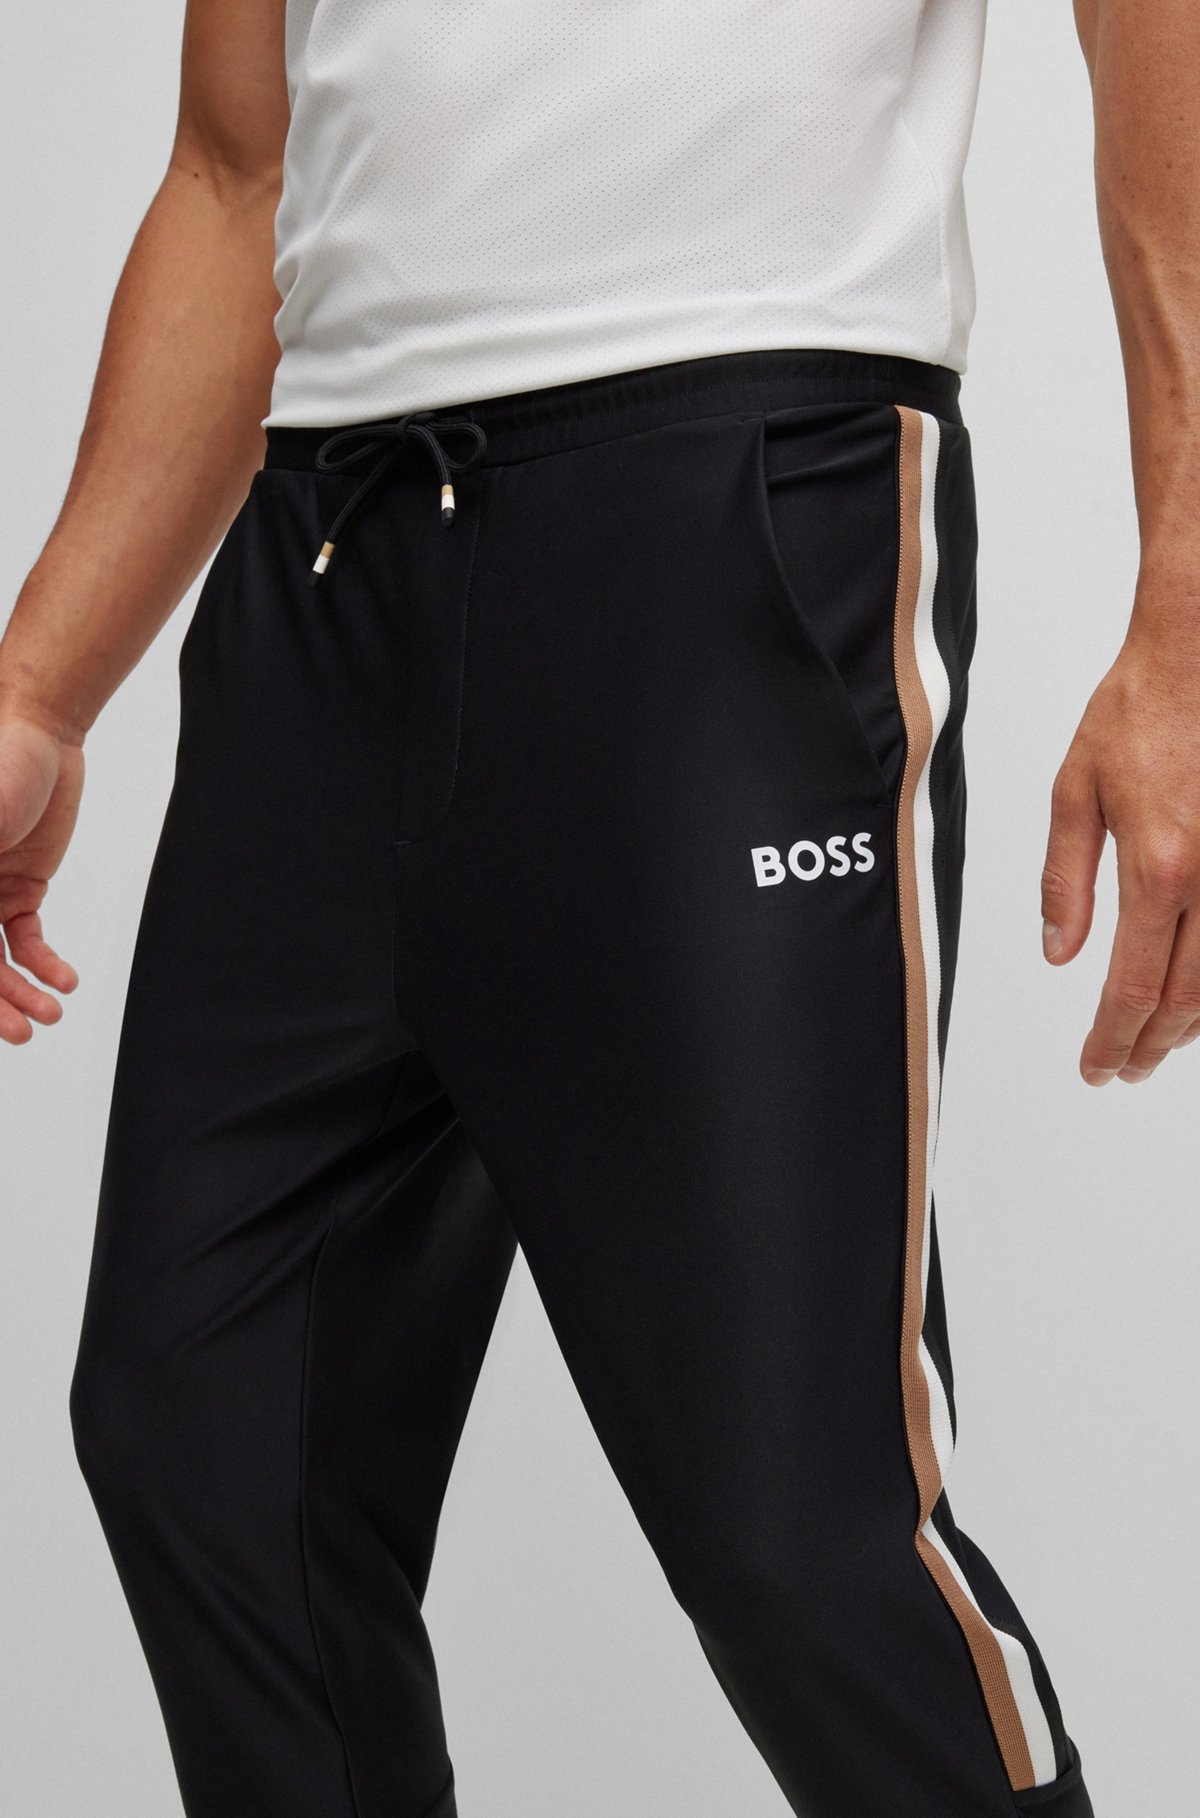 BOSS x Matteo Berrettini tracksuit bottoms with stripes and logo, Black